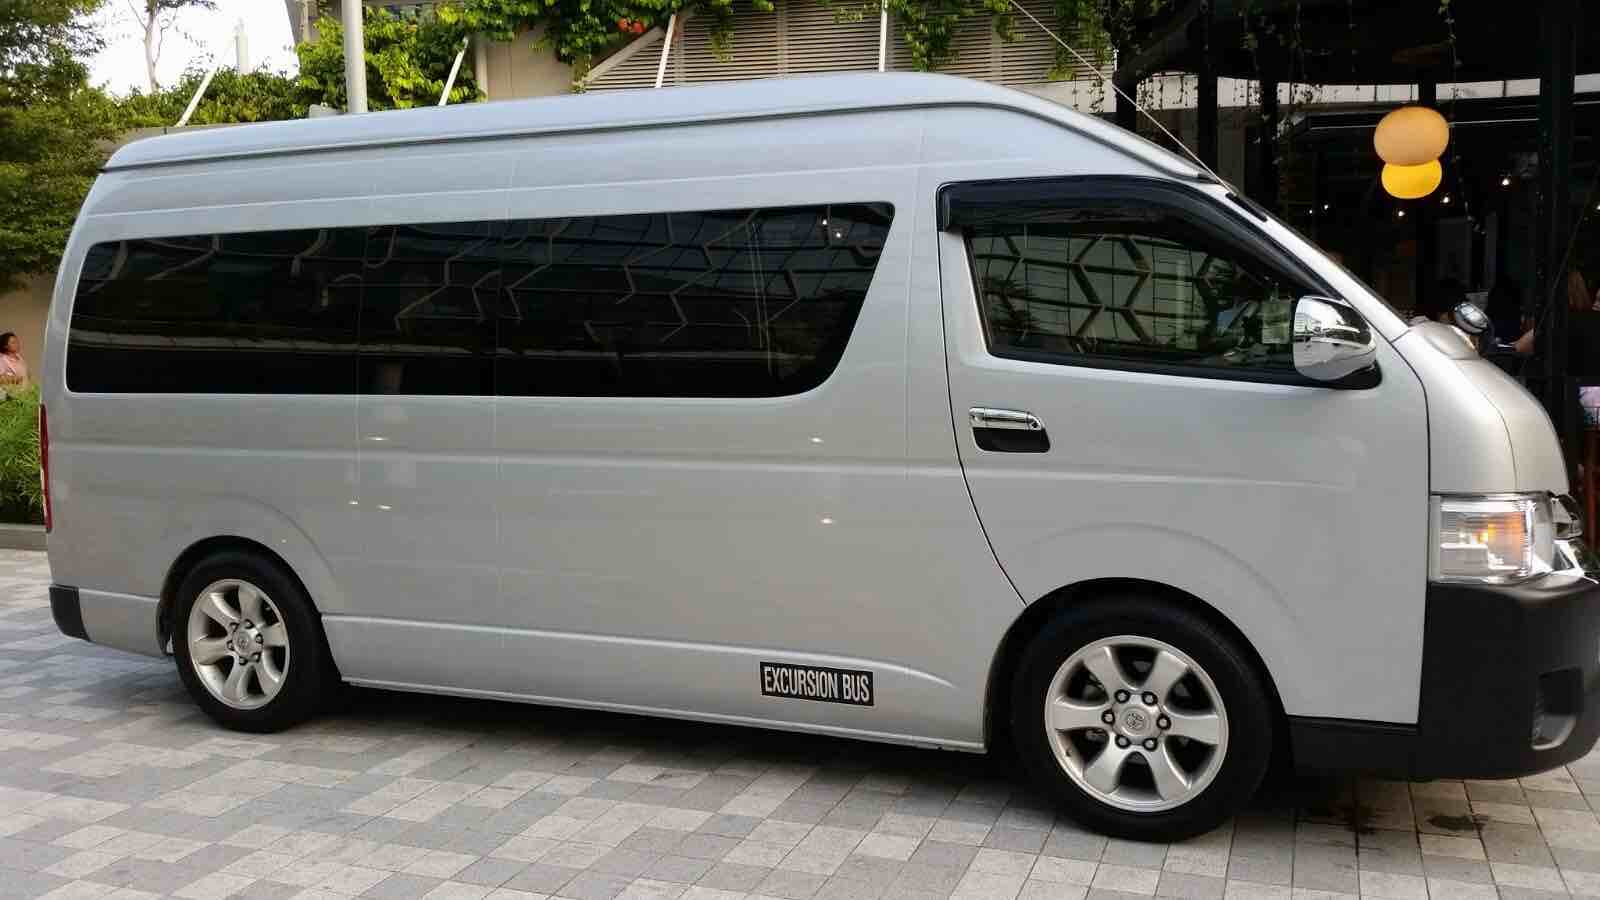 Finding the proper minibus rental Singapore